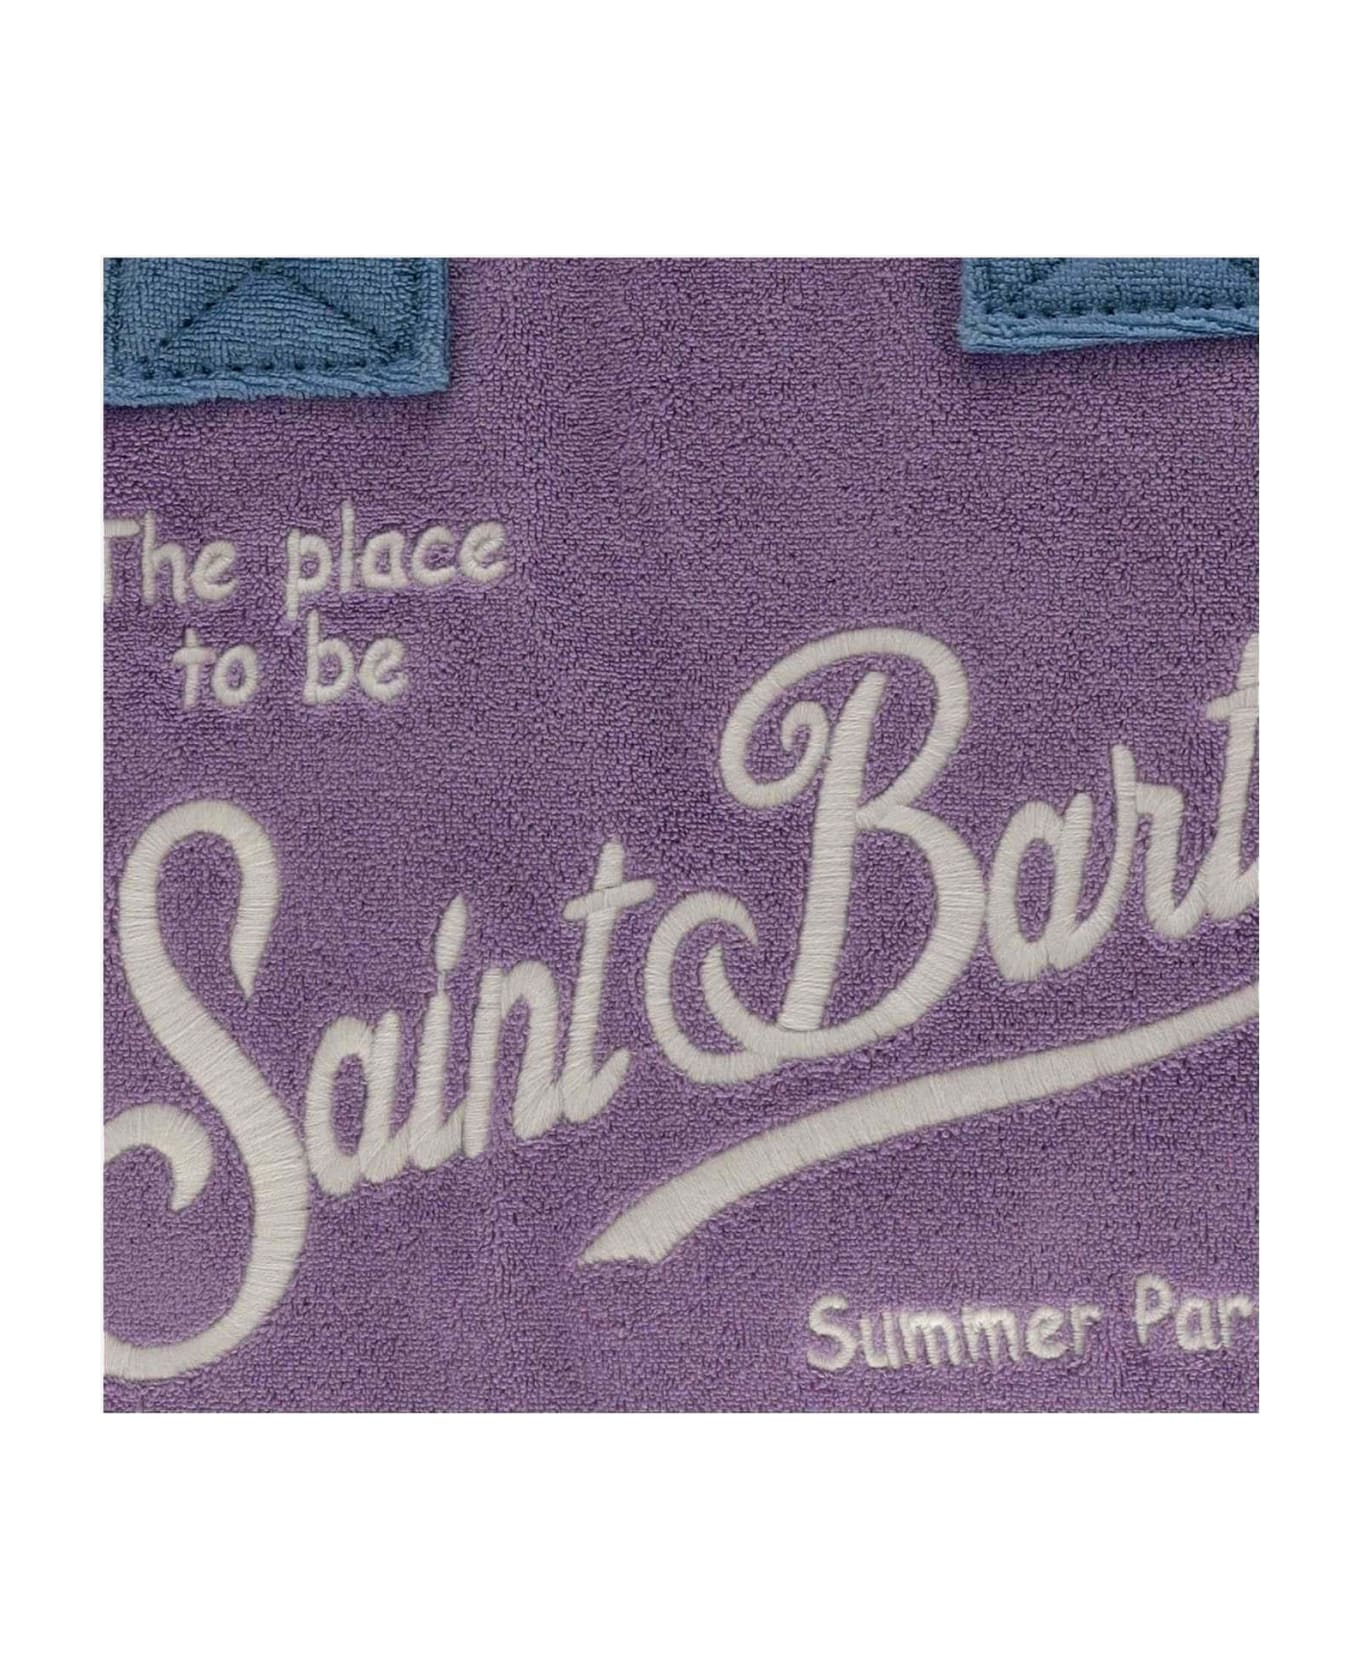 MC2 Saint Barth Colette Tote Bag With Logo - Purple